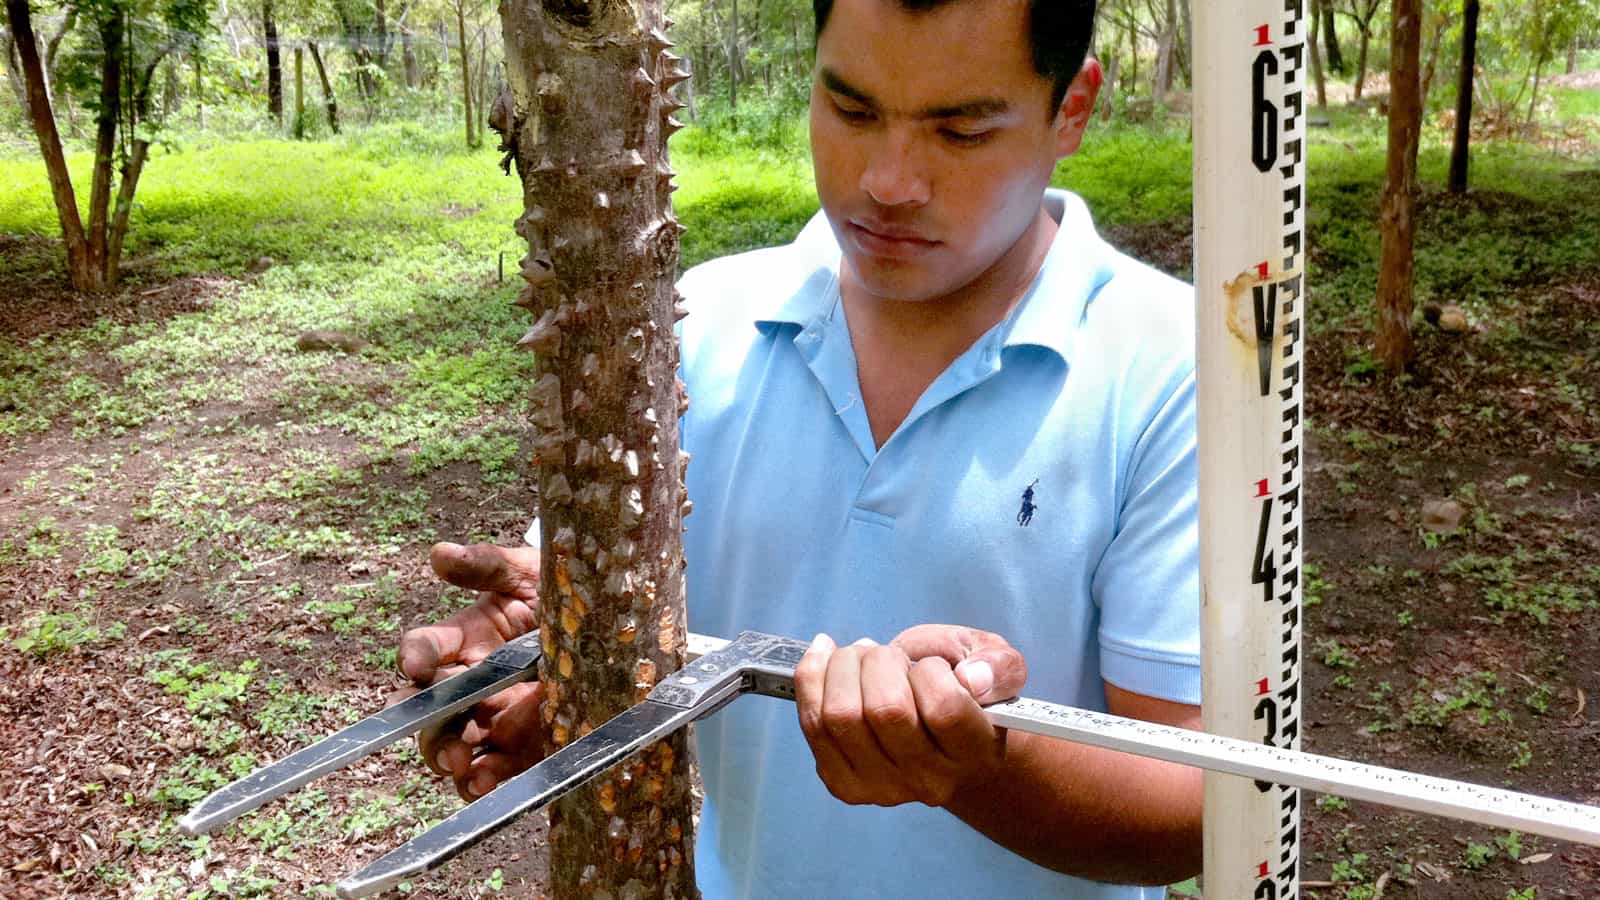 A man measuring the diameter of a tree trunk with a vernier caliper